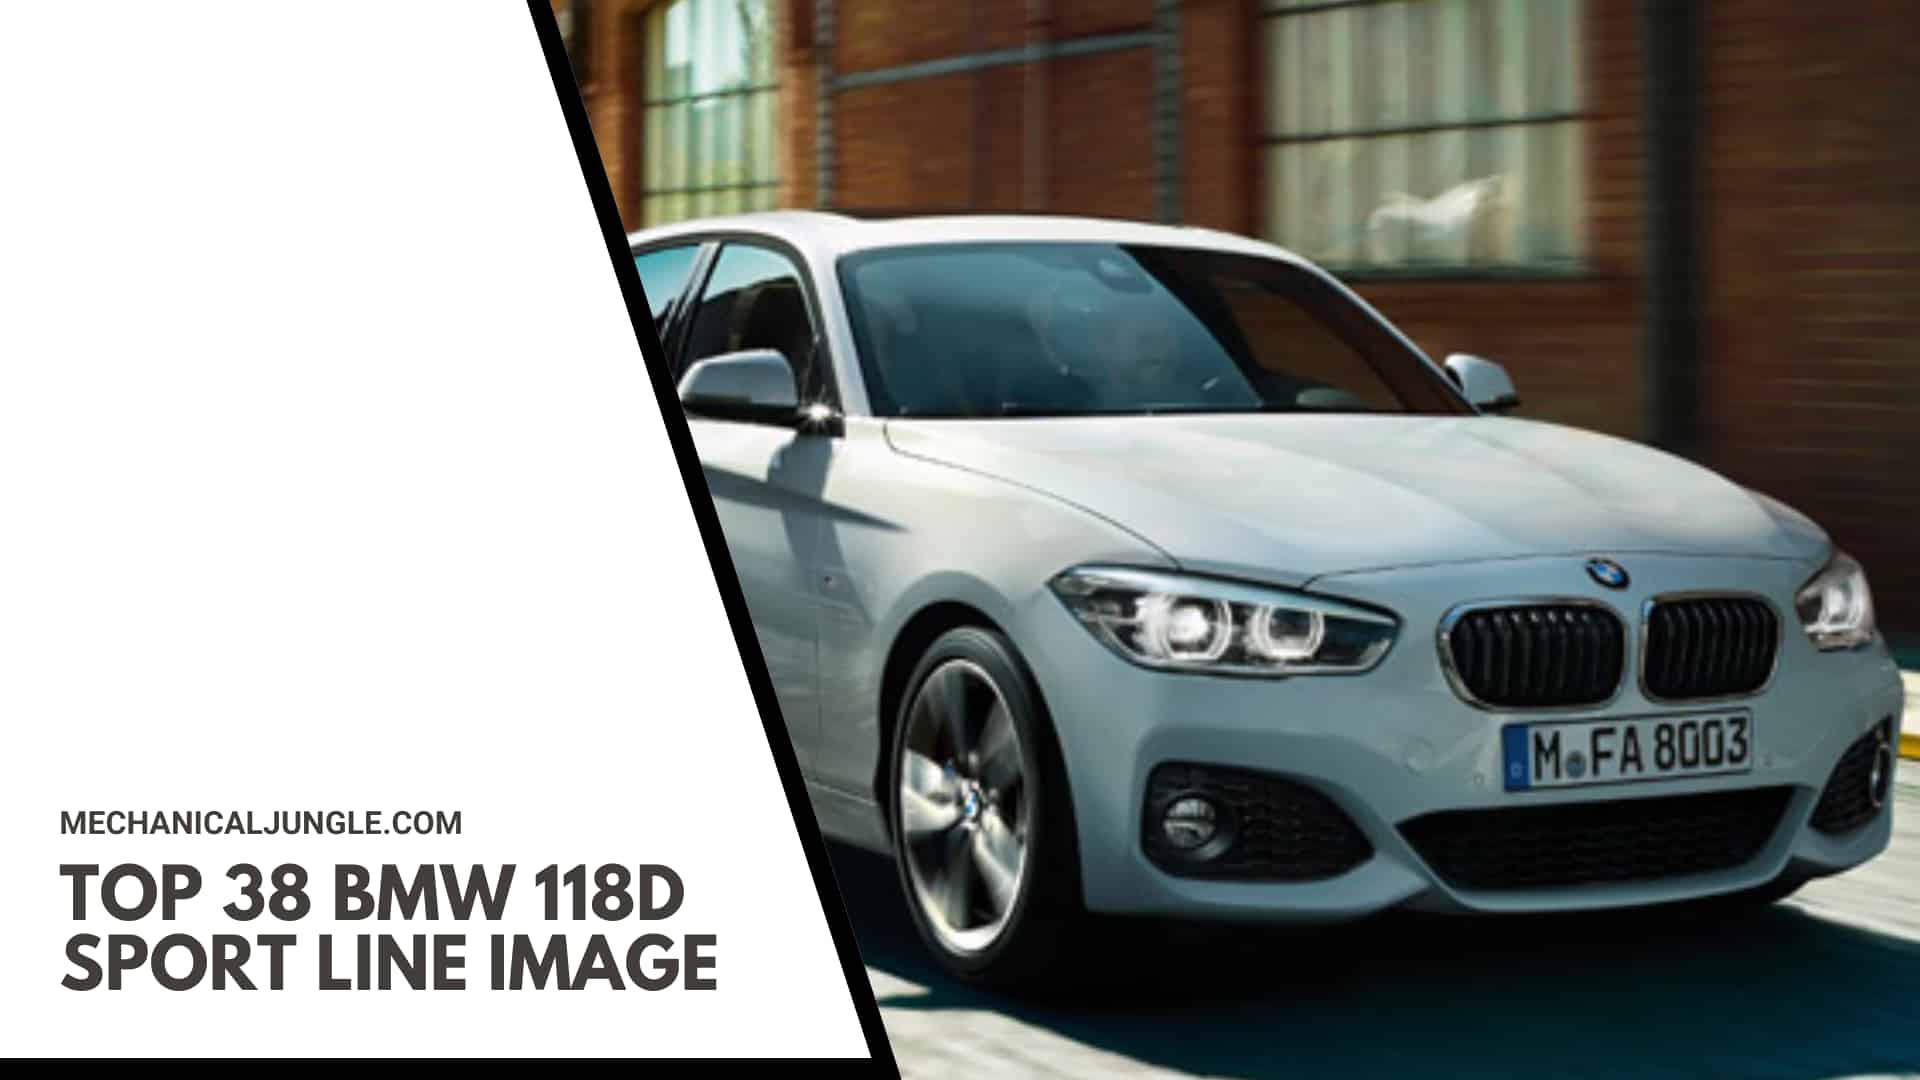 Top 38 BMW 118d Sport Line Image